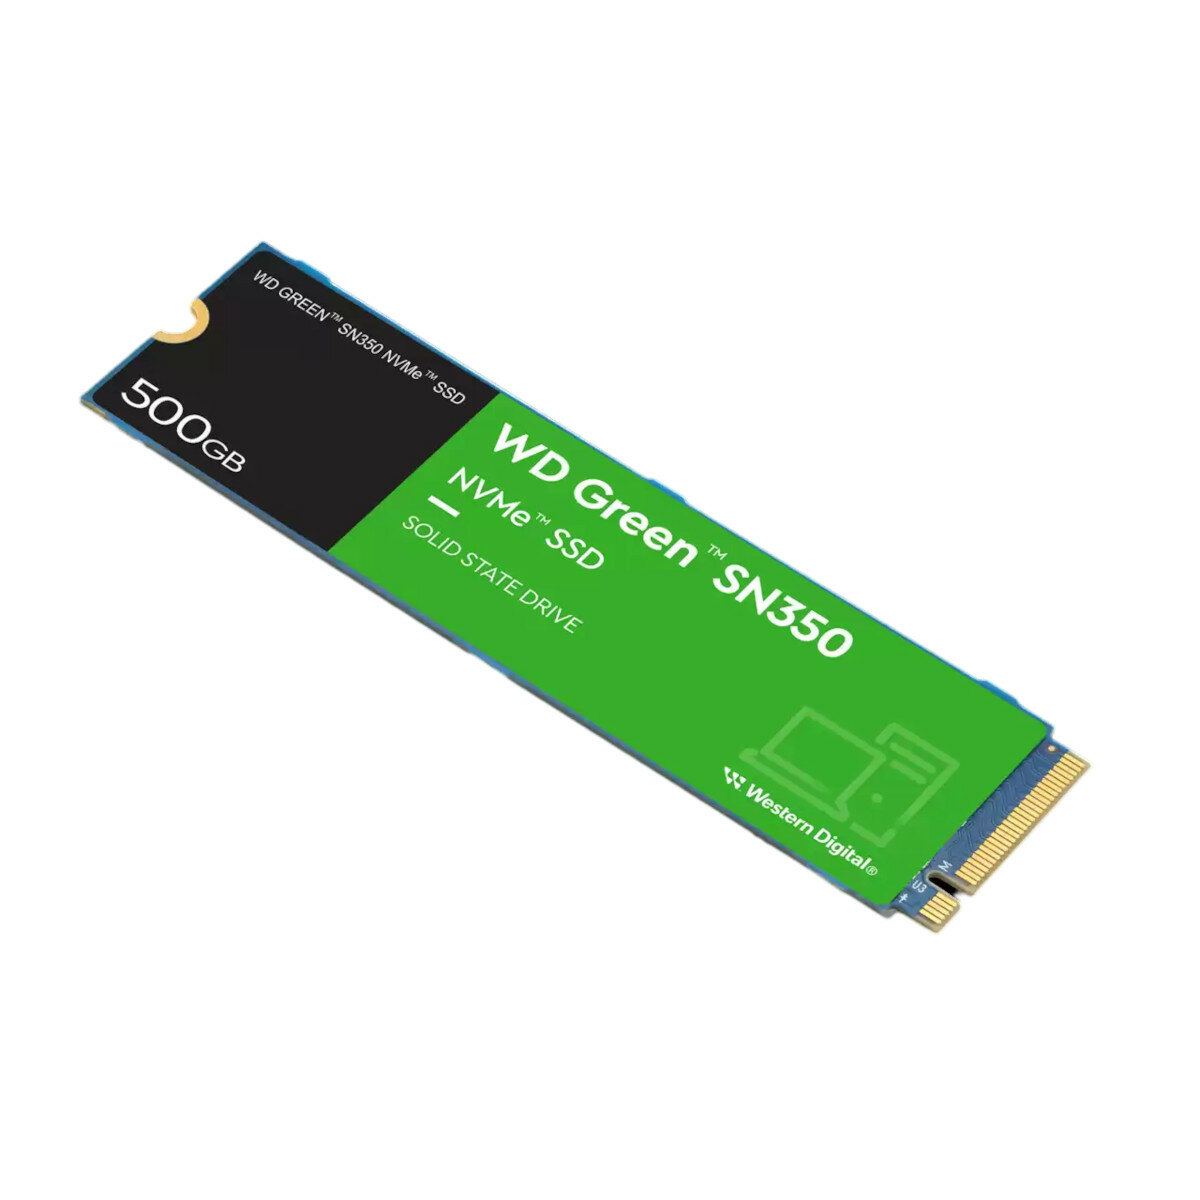 Dysk SSD WD Green SN350 500GB widok pod skosem